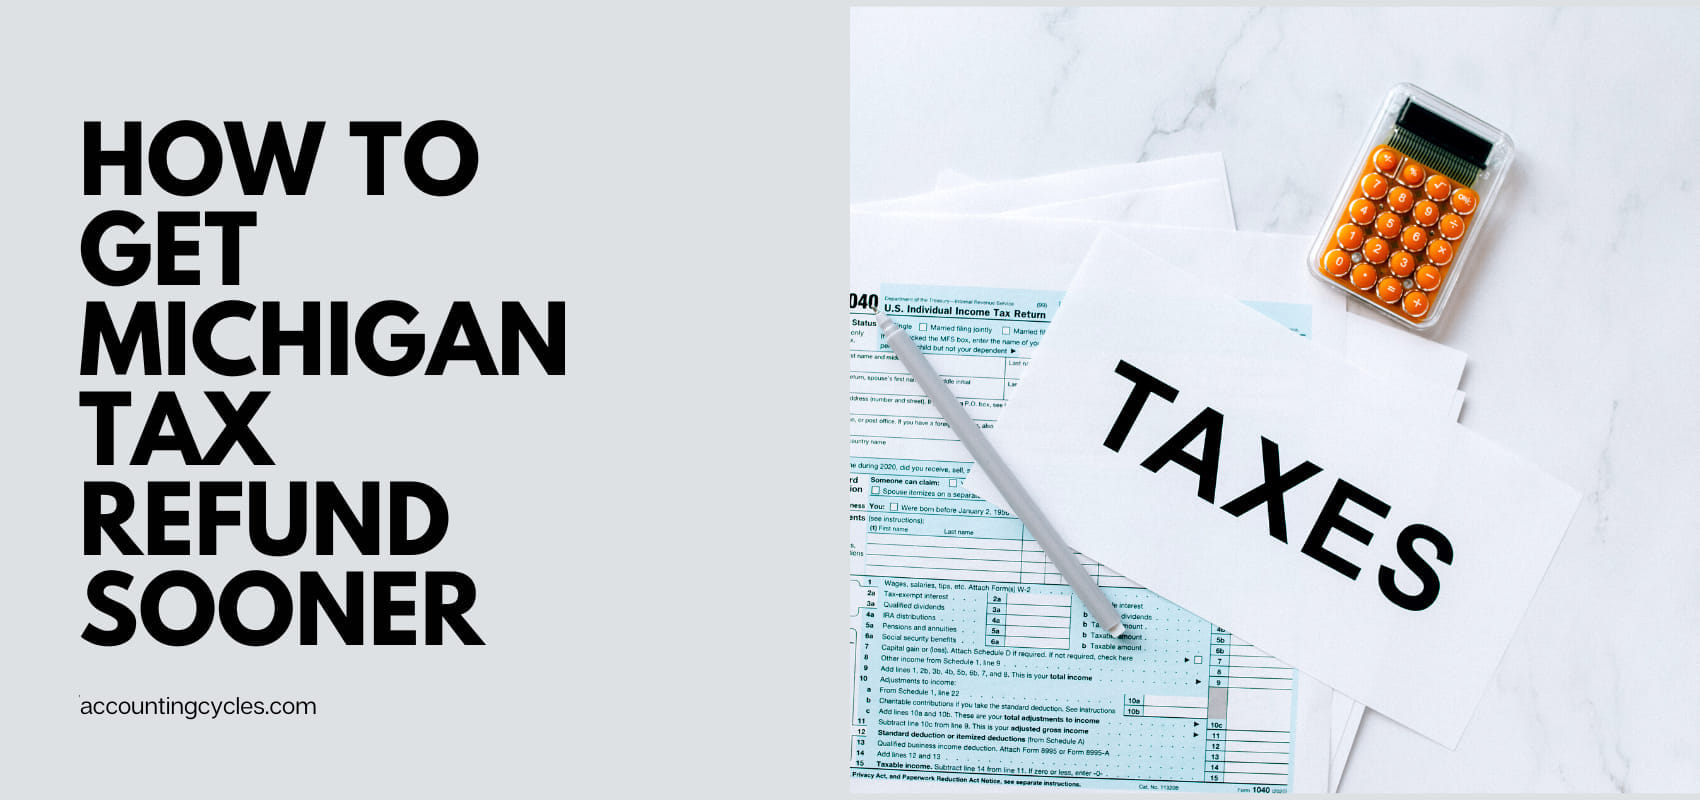 How To Get Michigan Tax Refund Sooner